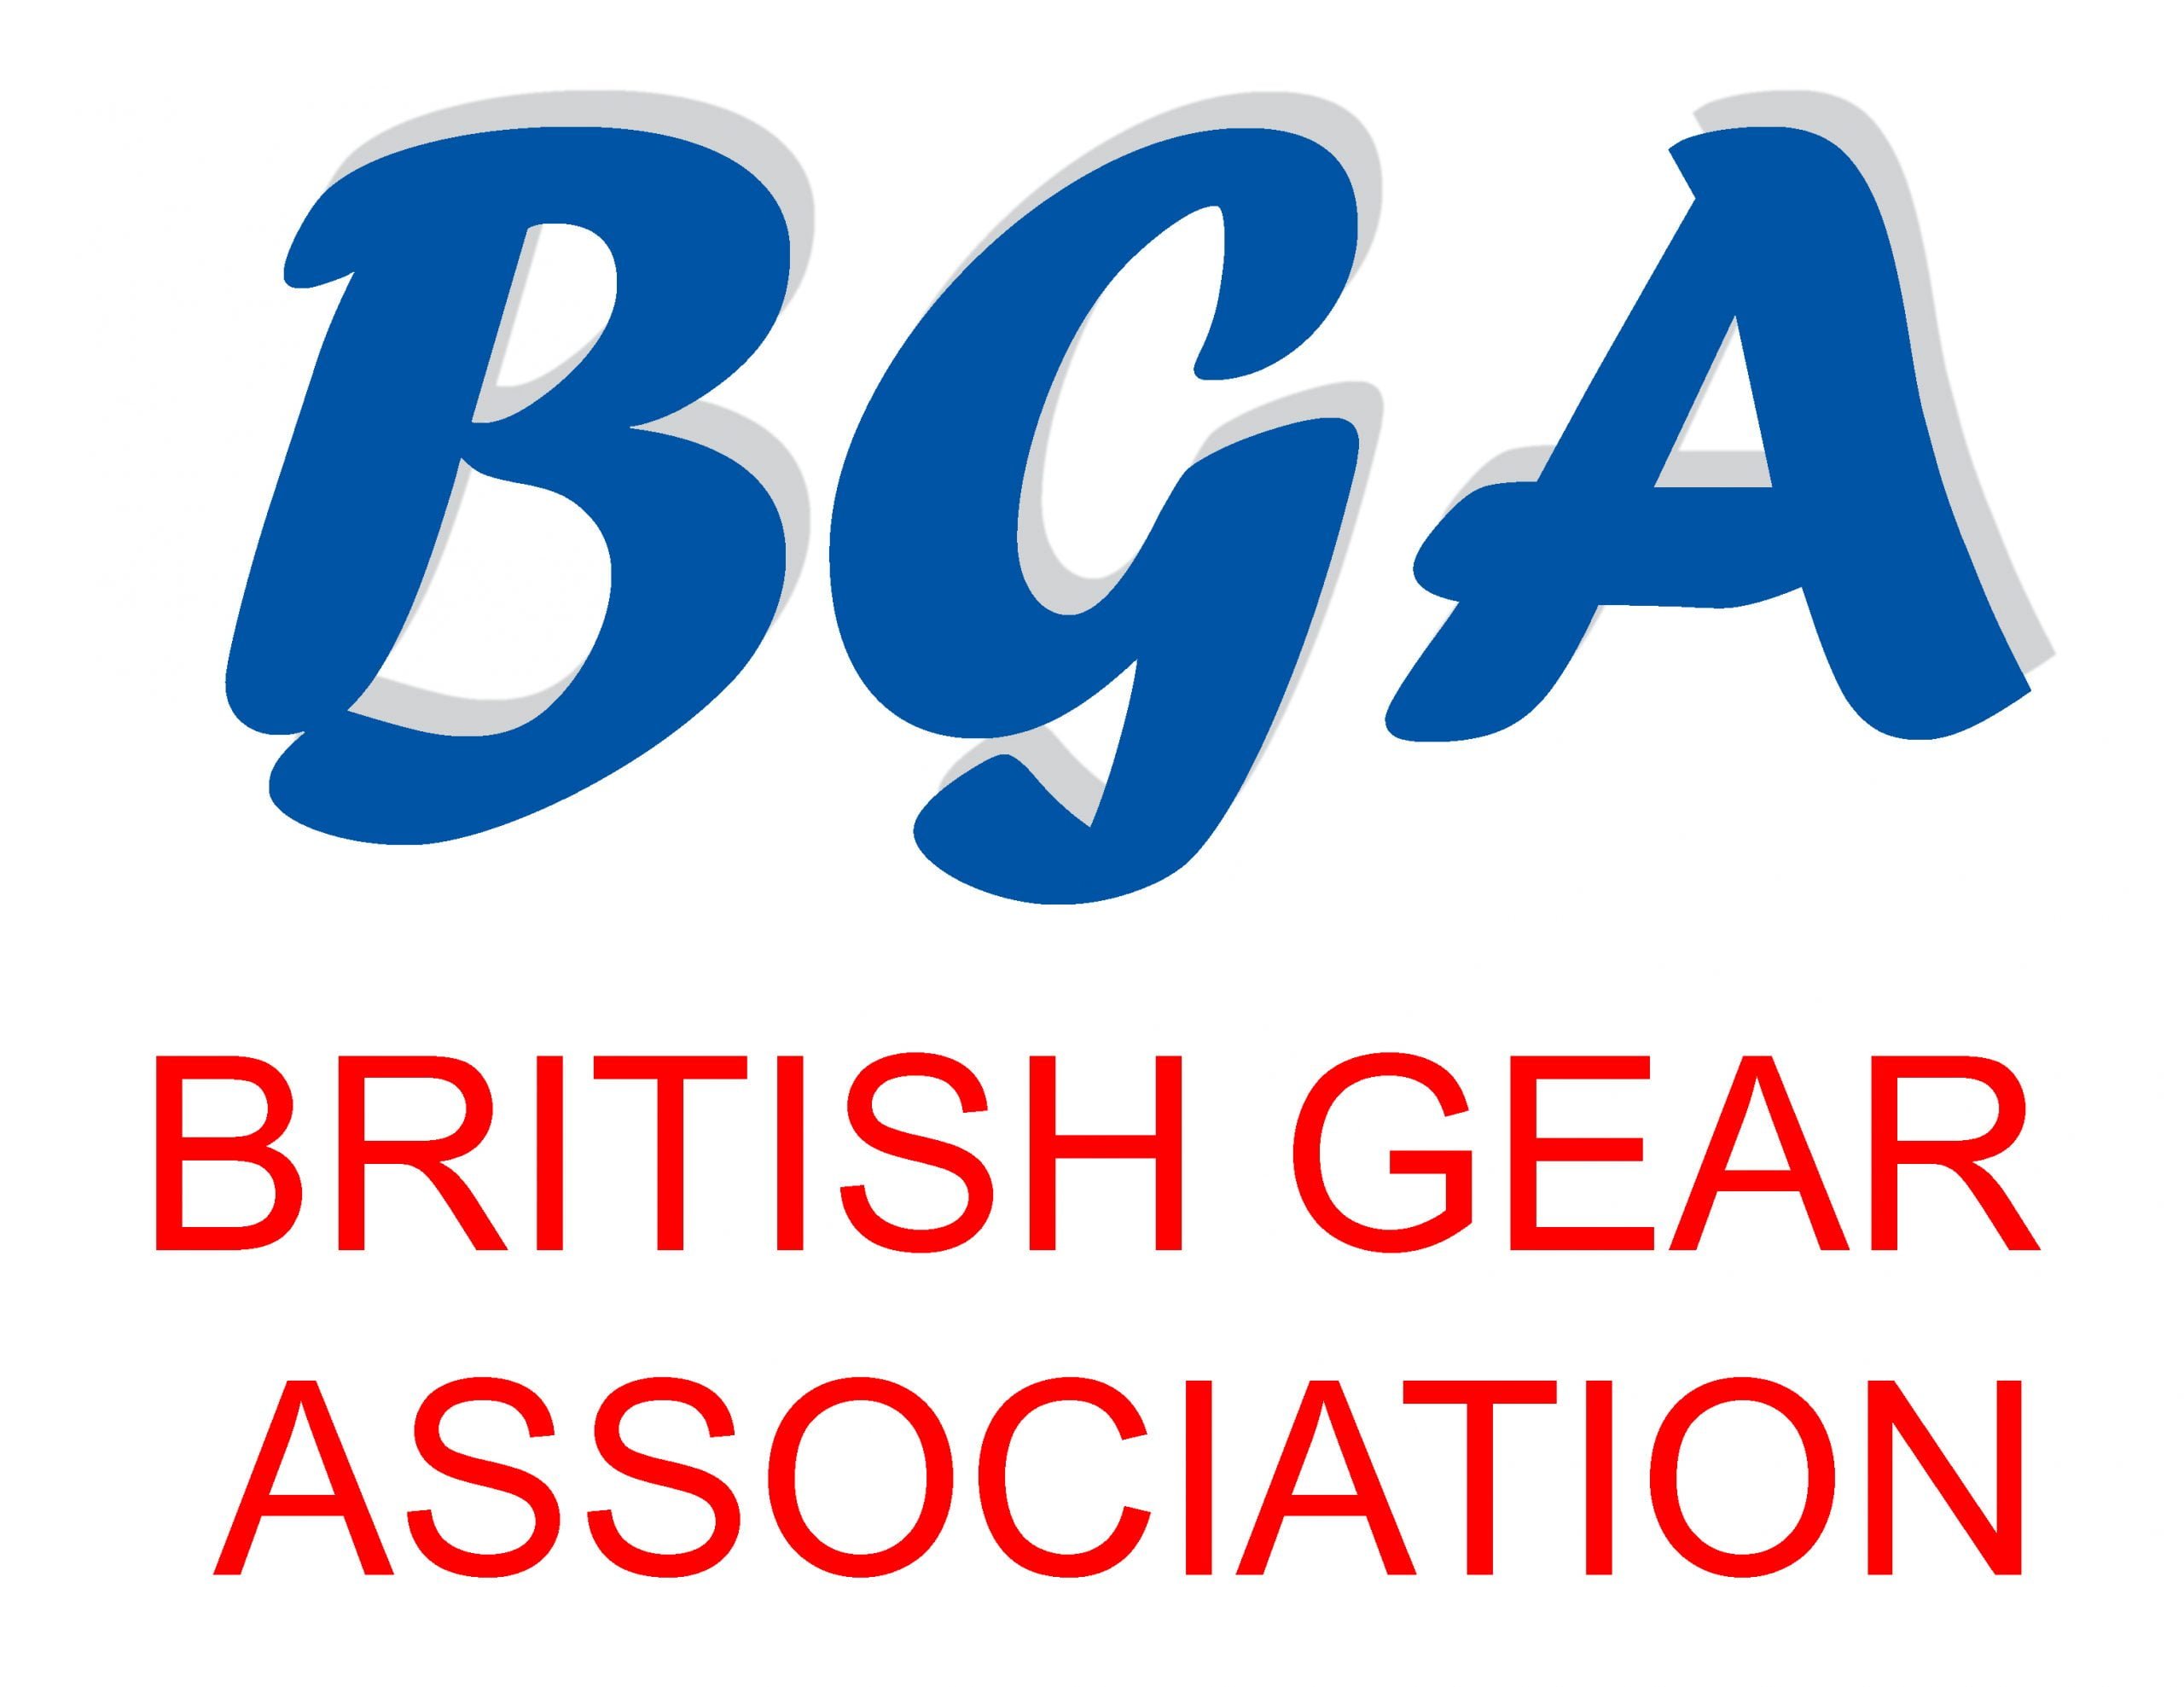 Olsen joins the British Gear Association